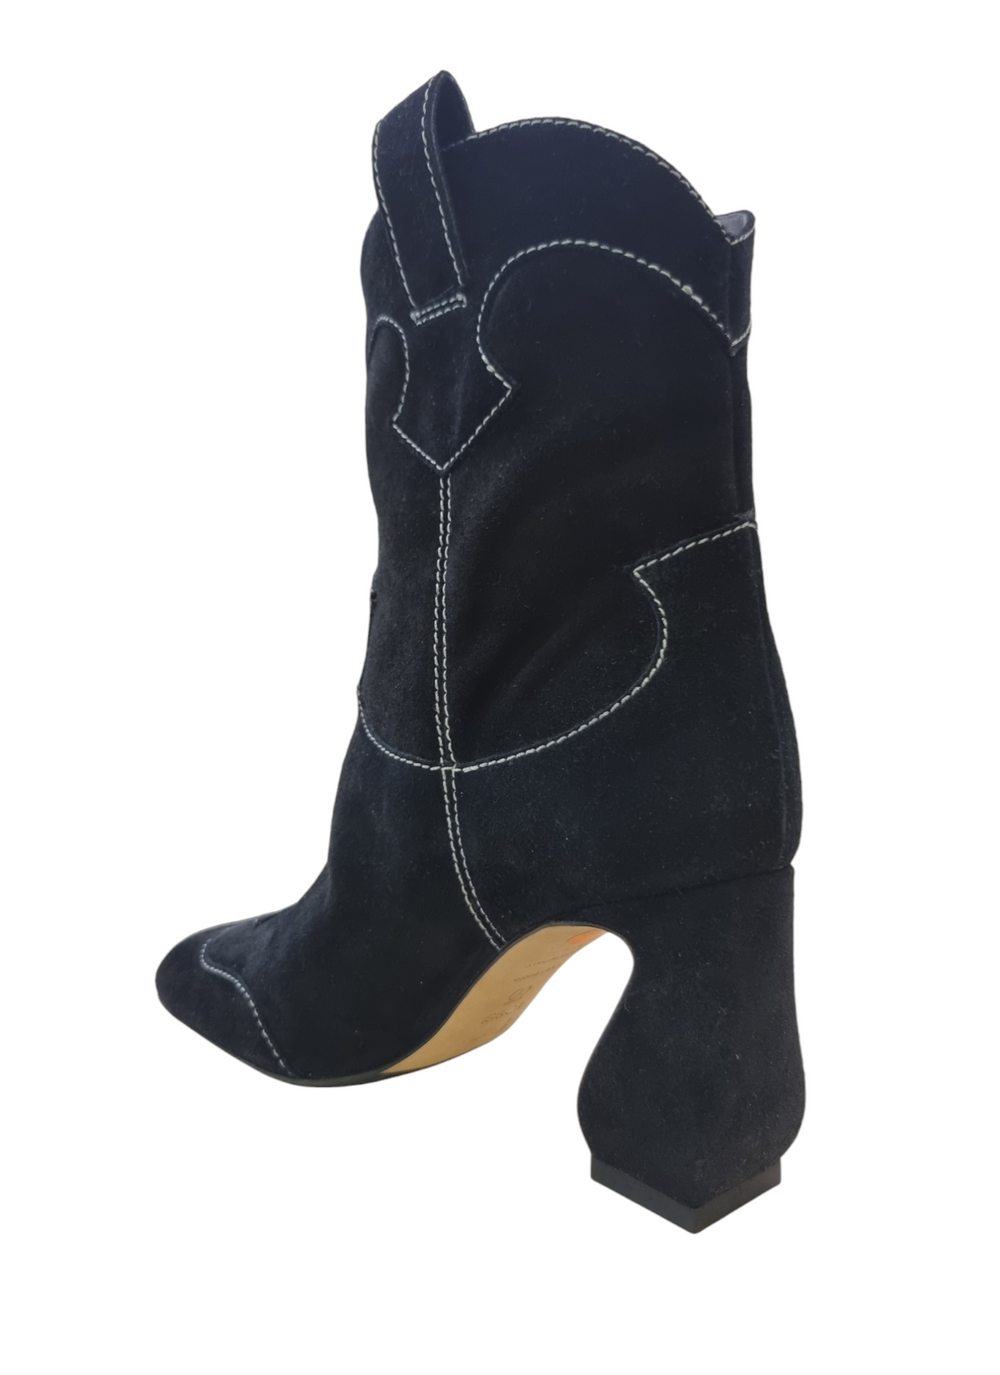 Mia Suede Boots - SERGIO ROSSI - Liberty Shoes Australia